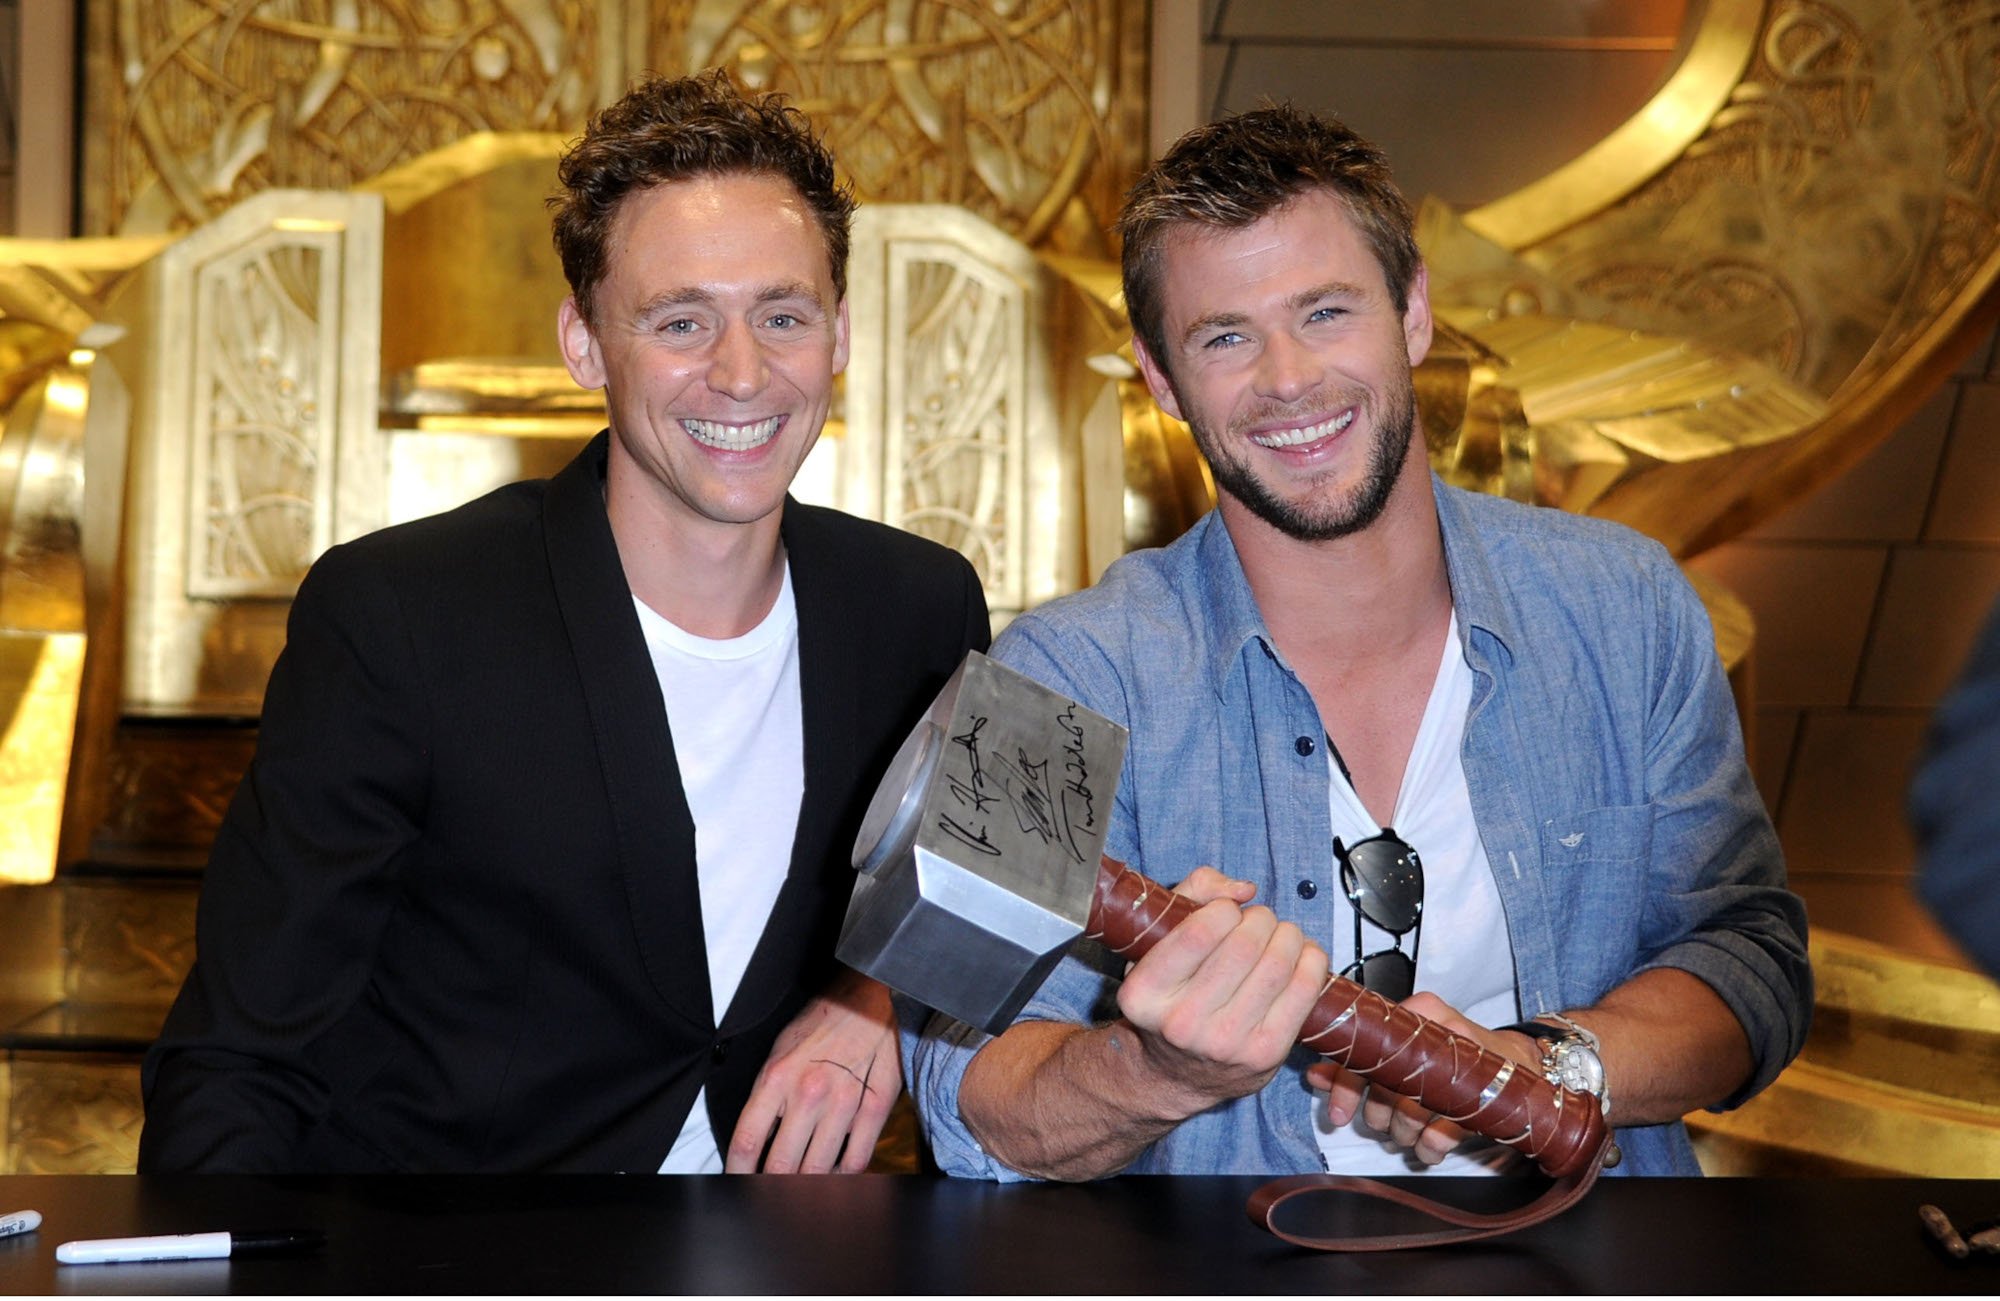 'Loki' star Tom Hiddleston sits next to Chris Hemsworth, who is holding Thor's hammer